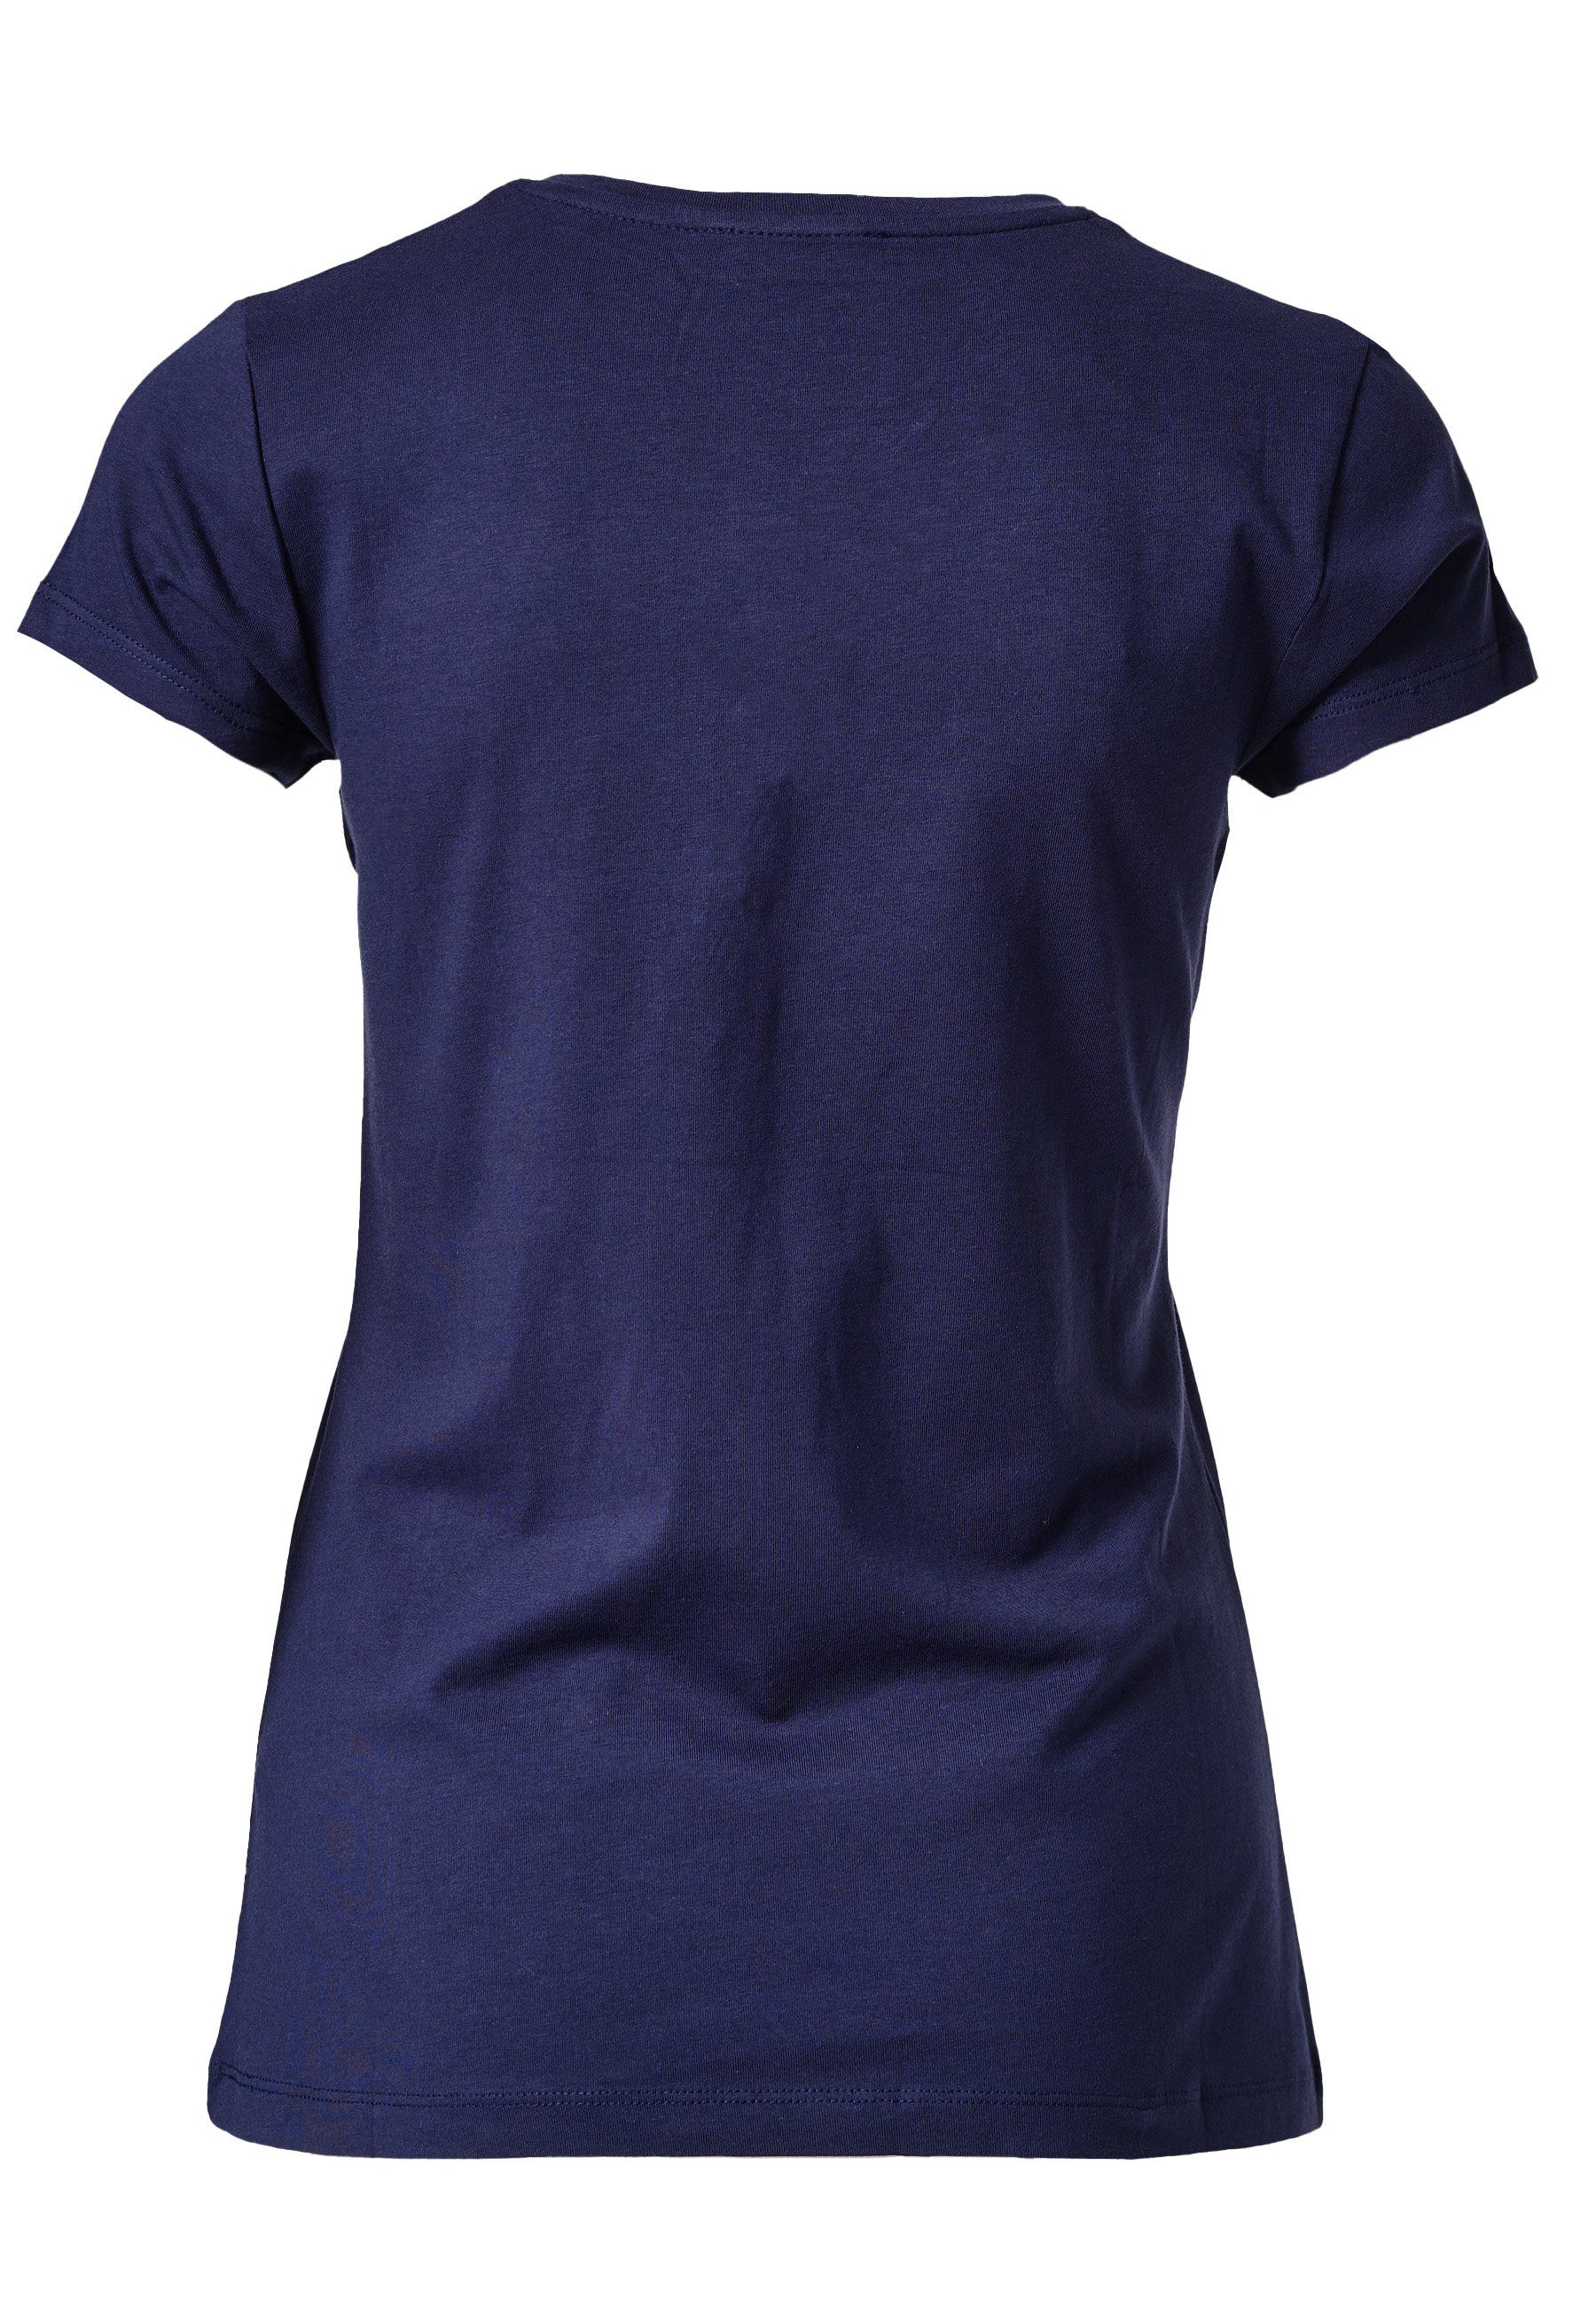 blau mit Front-Print Decay T-Shirt